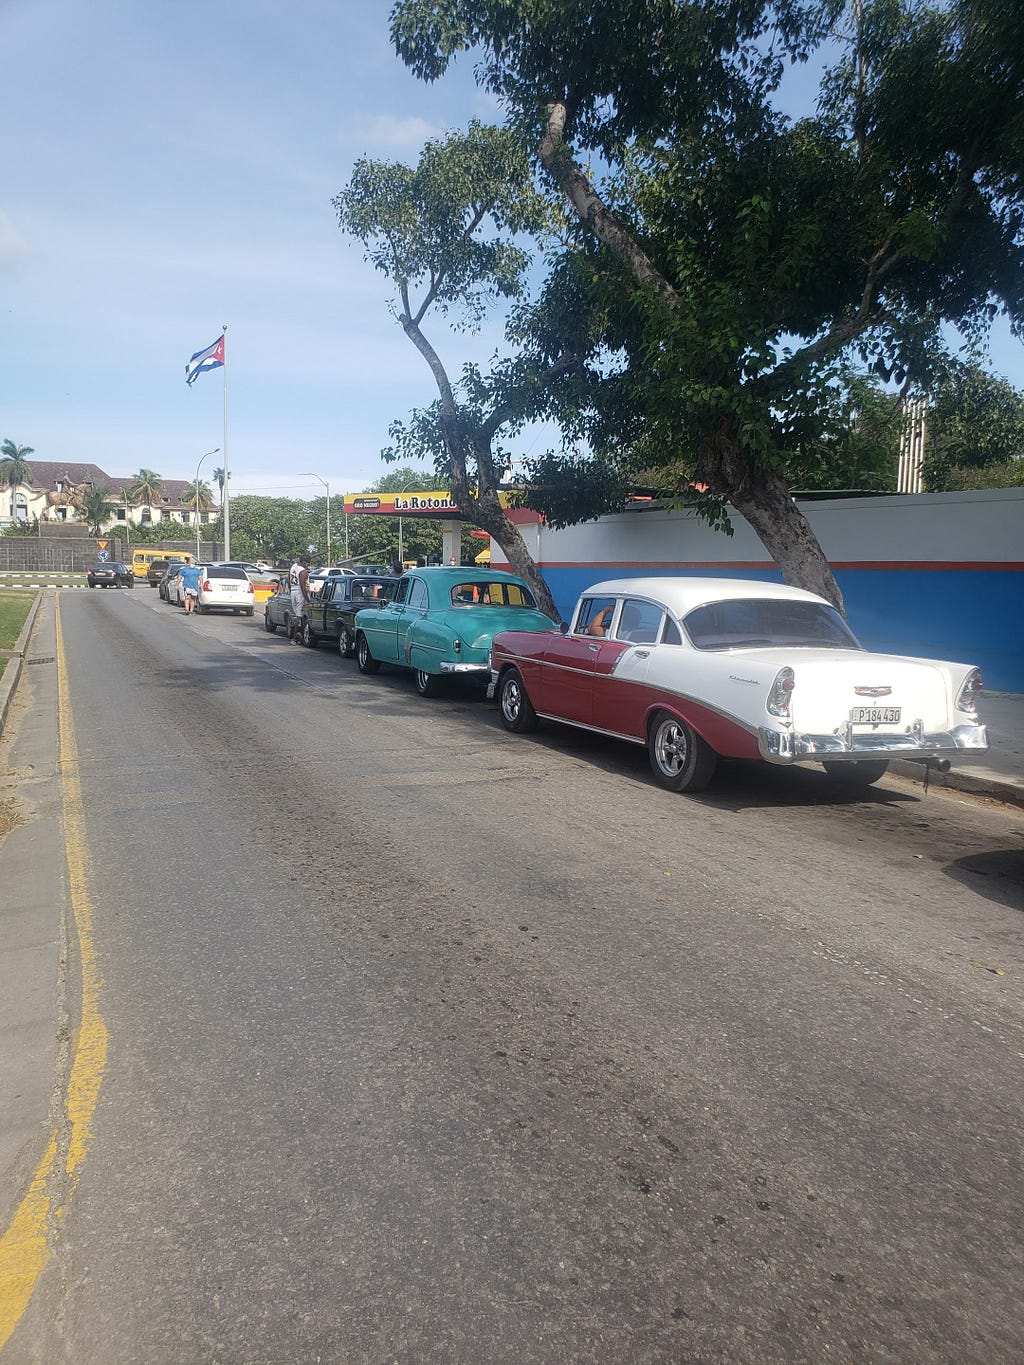 Line of cars on a street in Cuba